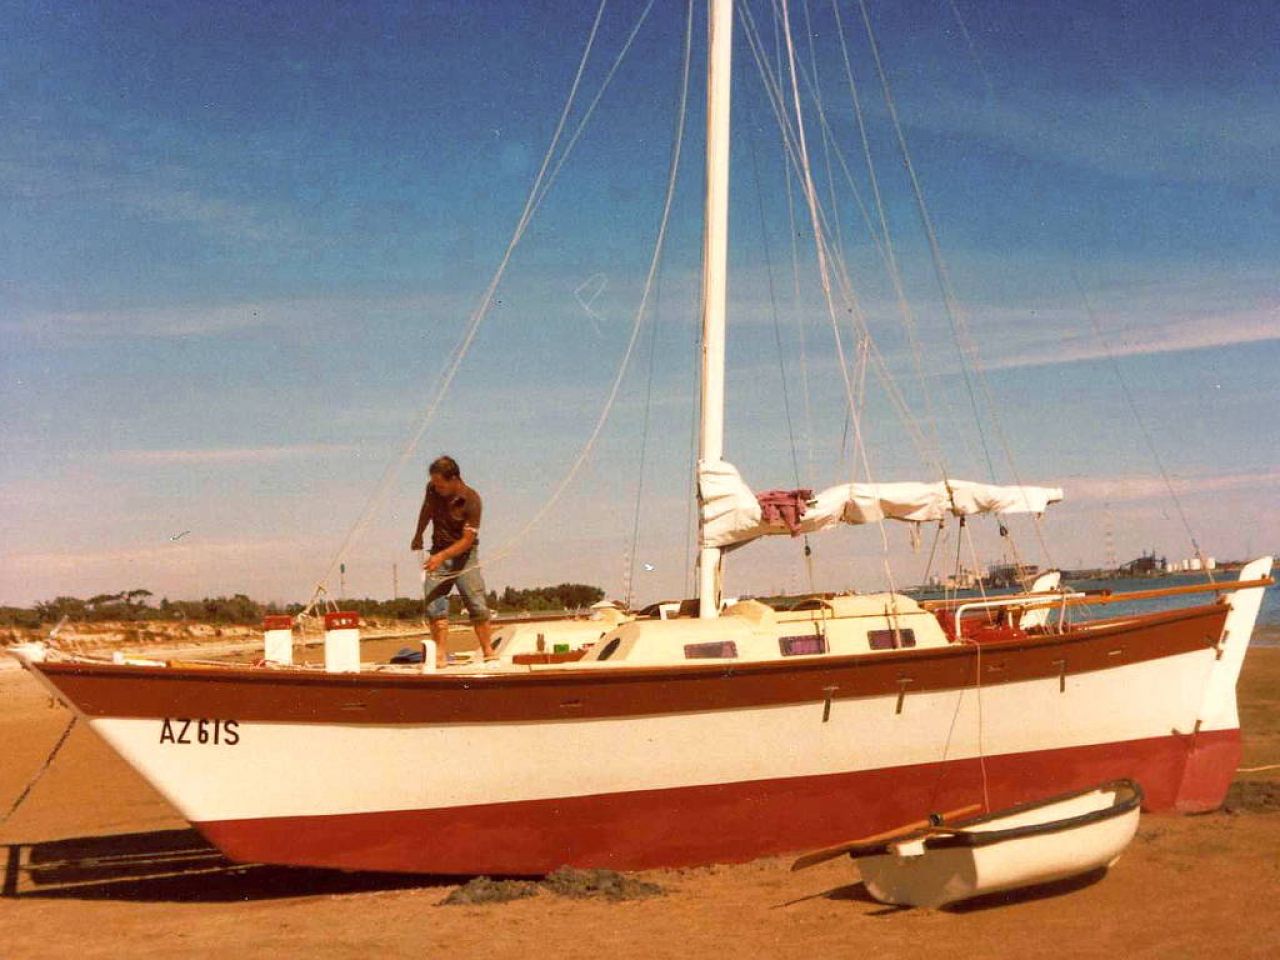 Catamaran on land, one person aboard